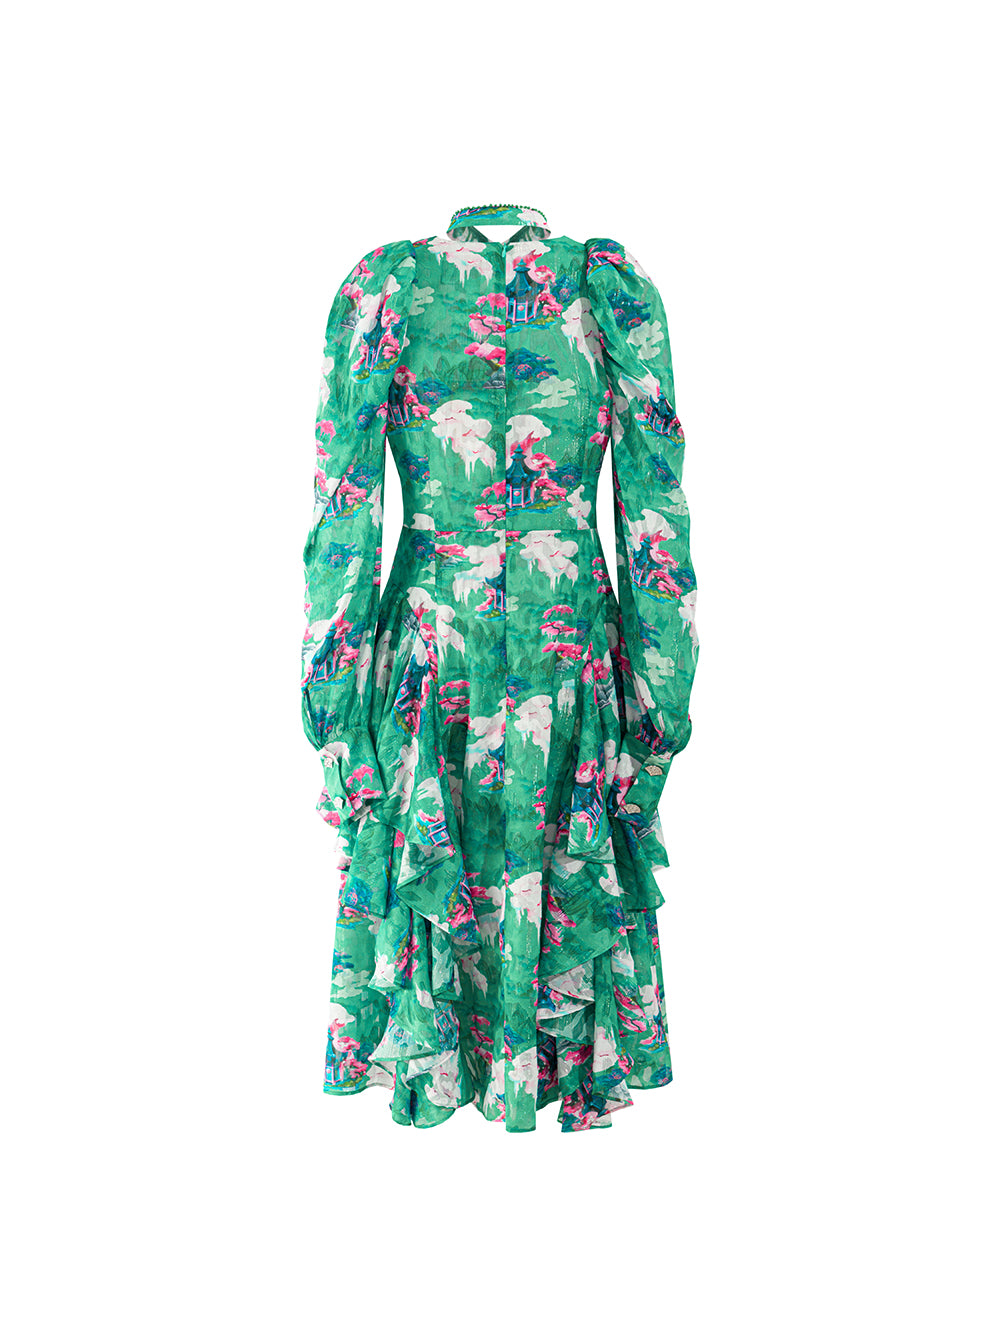 MUKZIN Jacquard Chiffon Breathable Comfortable V-neck Printed Green Dress